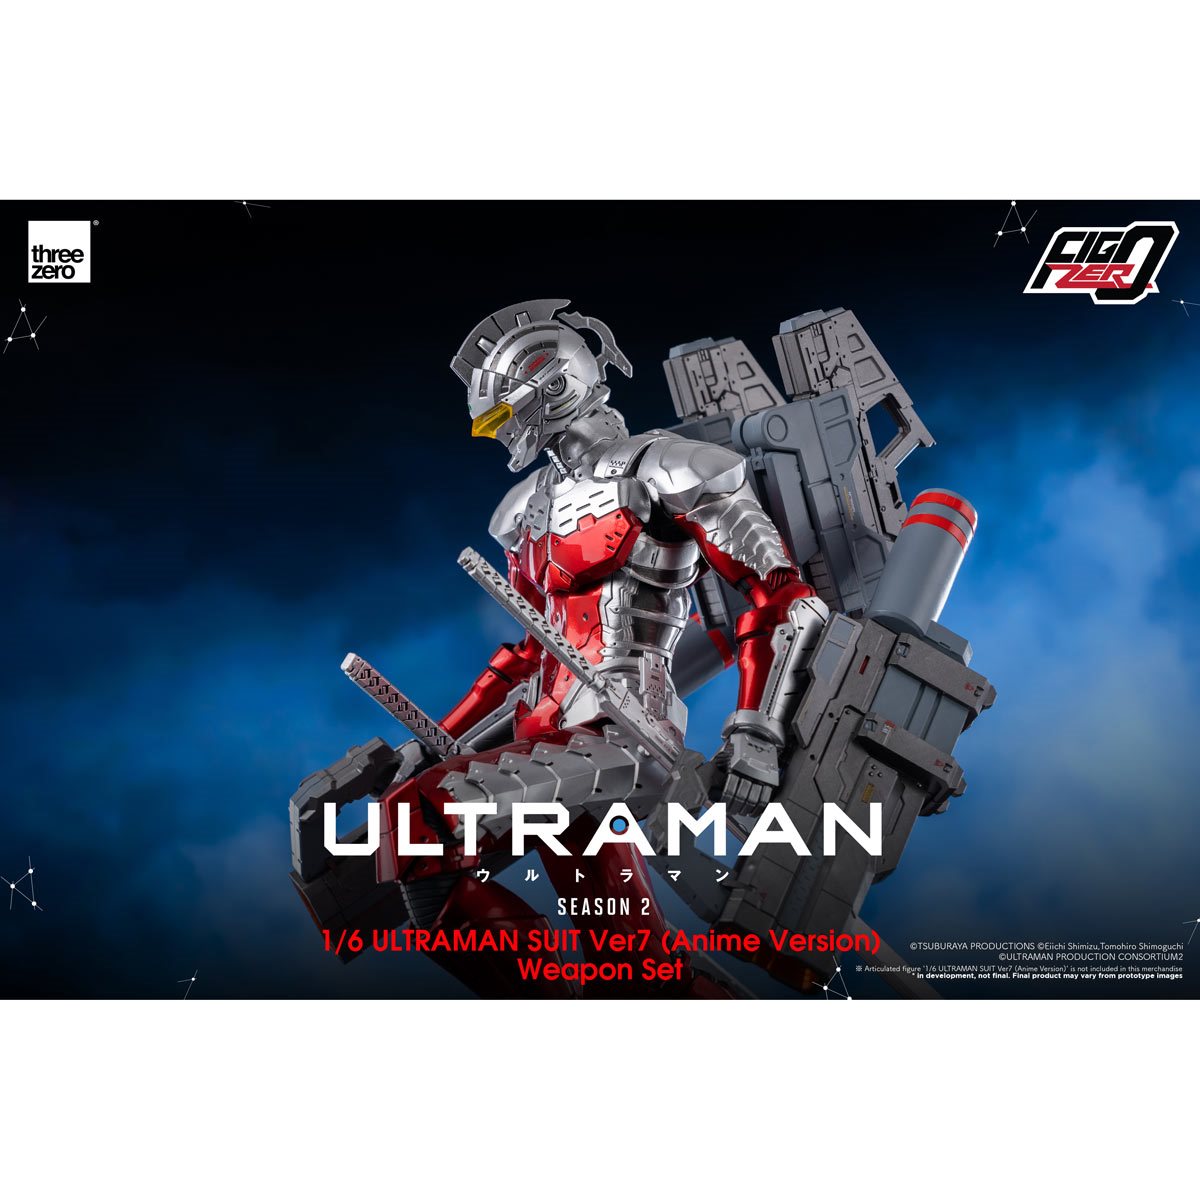 Ultraman FigZero Ultraman Suit Ver7 Anime Version 1:6 Scale